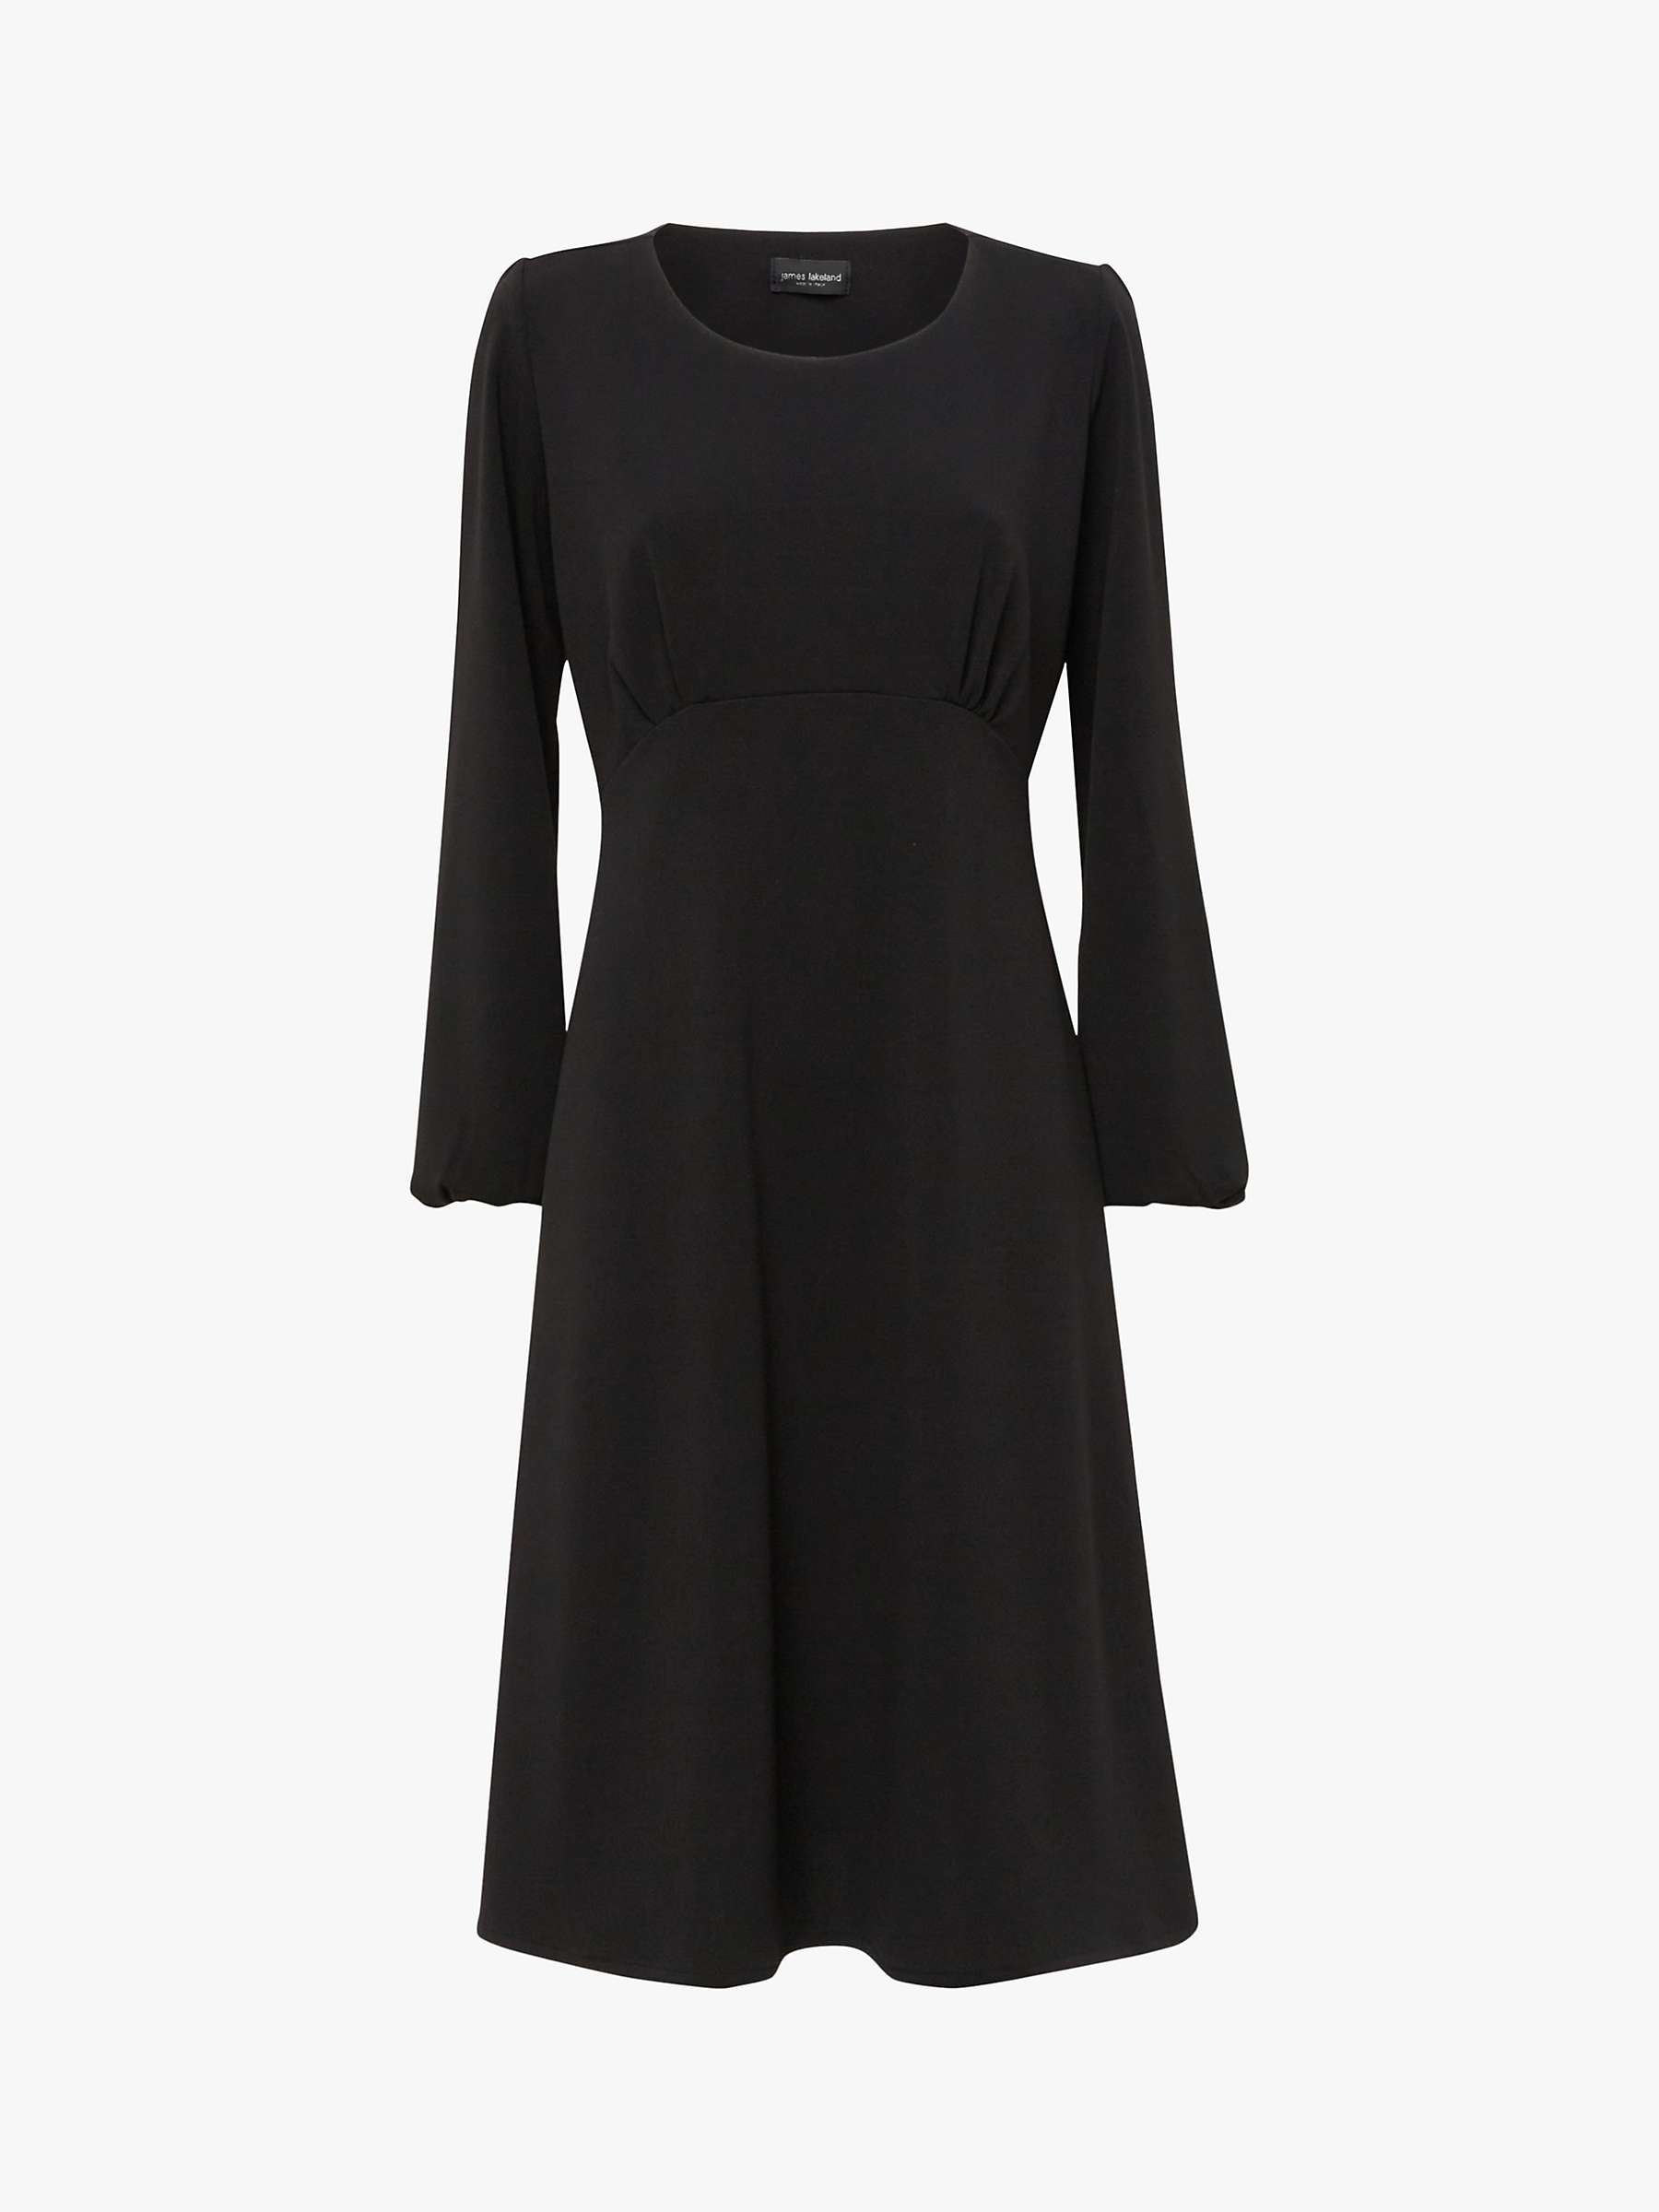 James Lakeland Scoop Neck A-Line Dress, Black at John Lewis & Partners